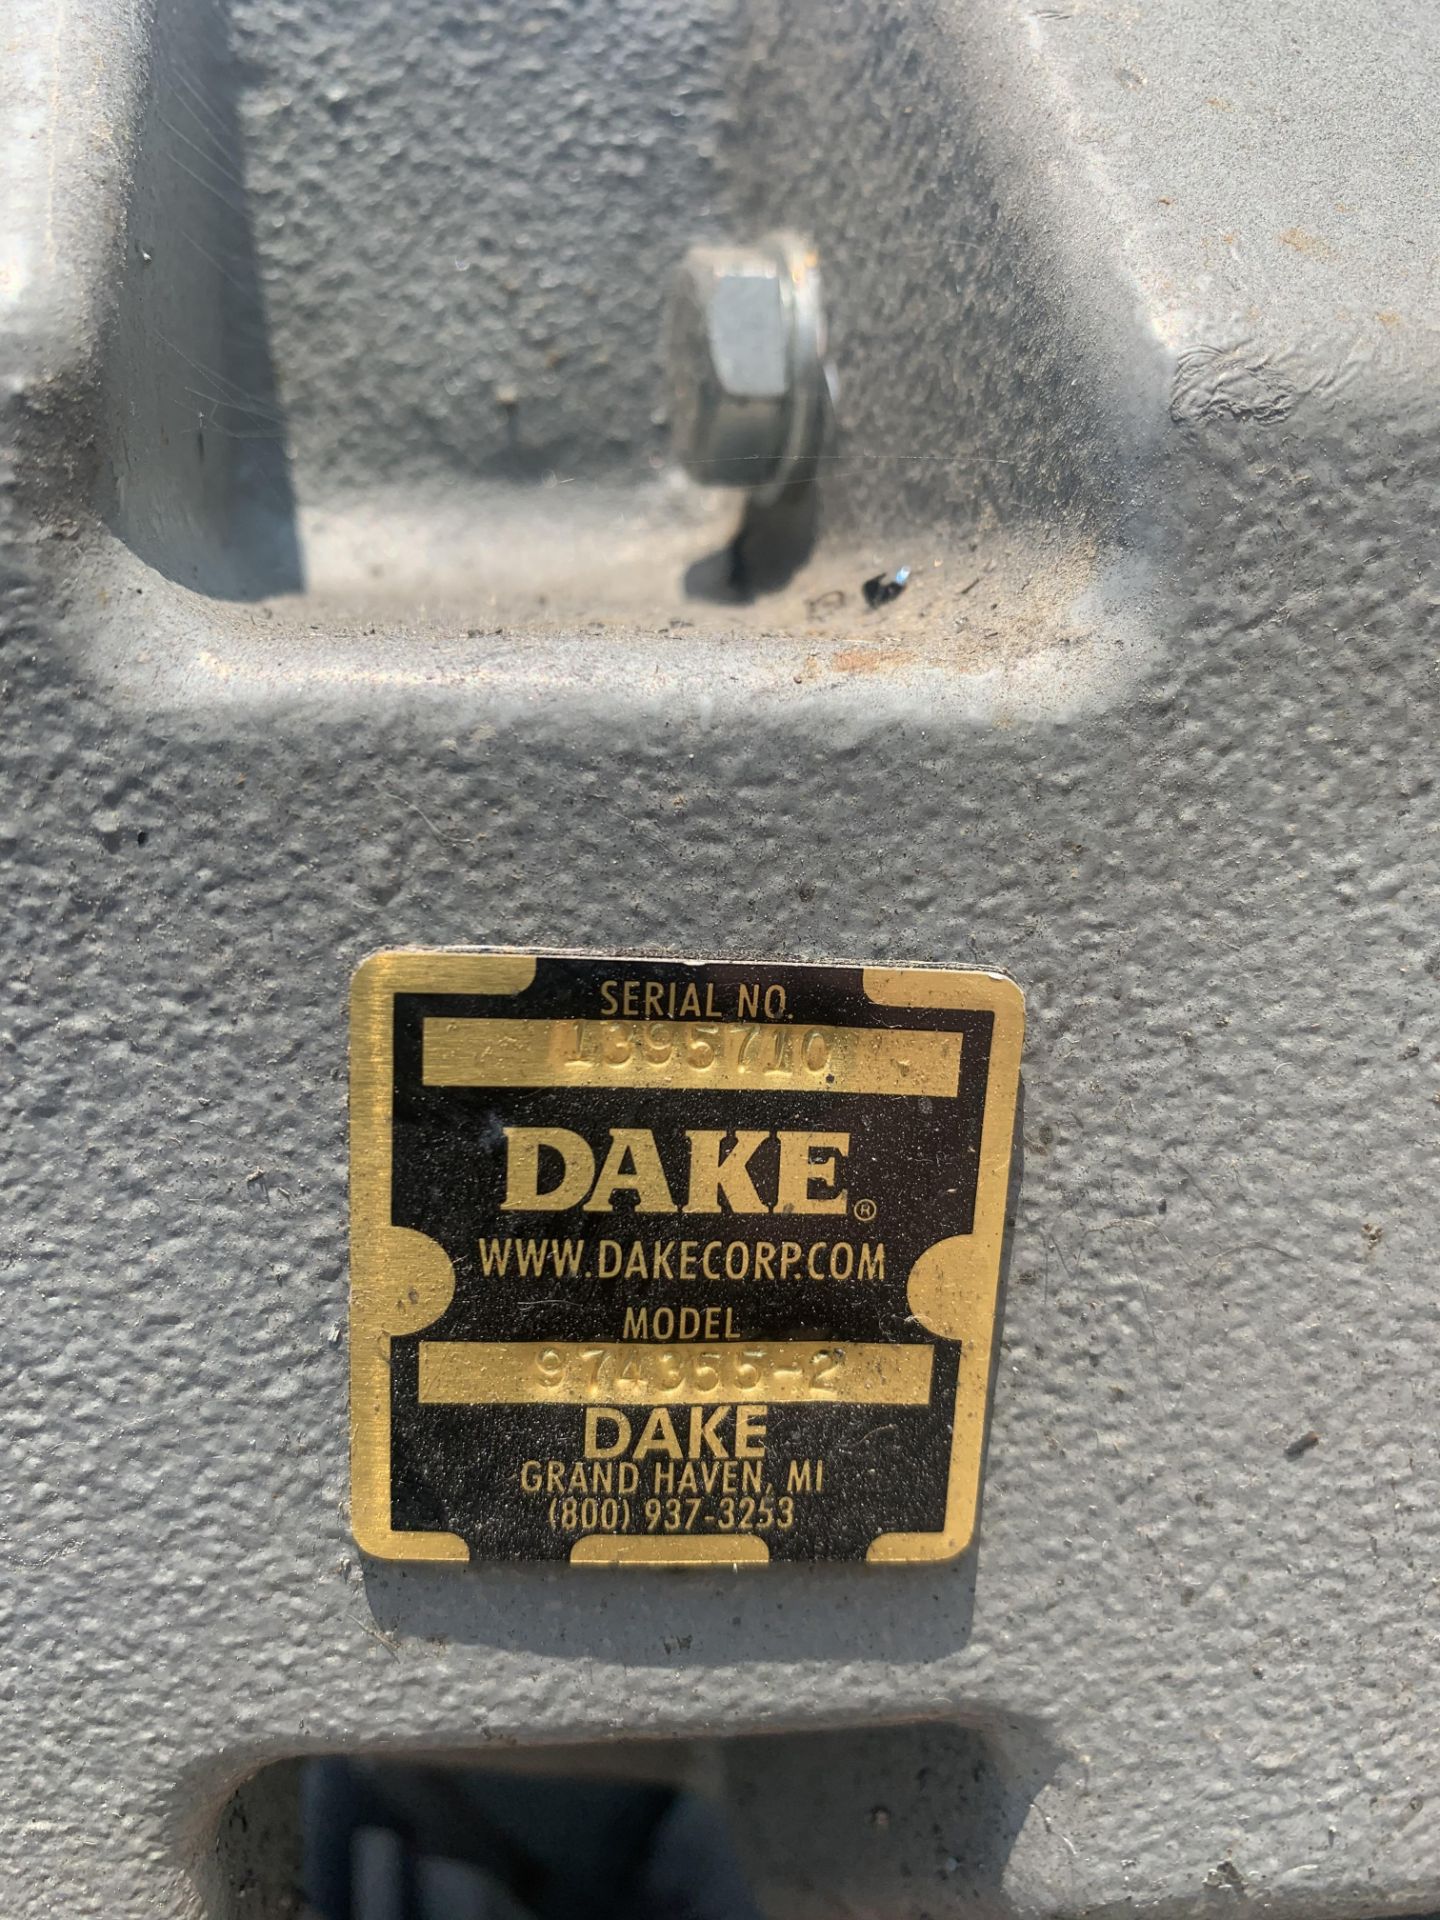 Dake Model 350 S Tech Cold Saw - Image 12 of 12